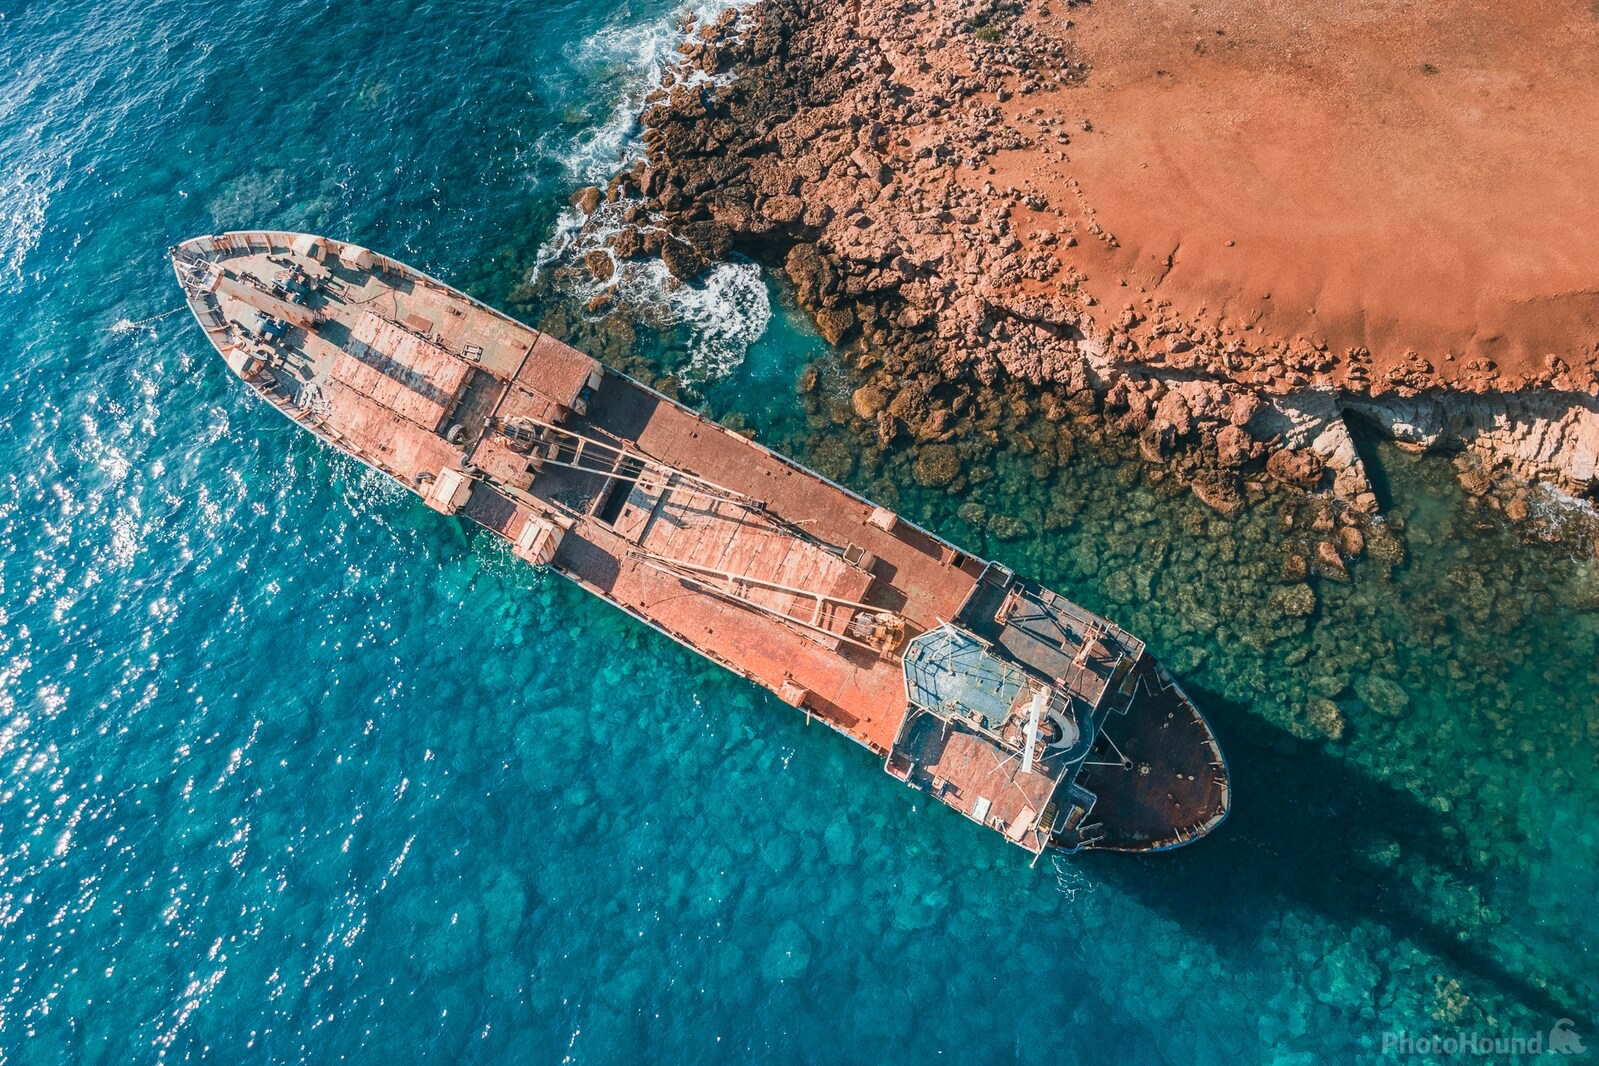 Image of EDRO III Shipwreck by James Billings.